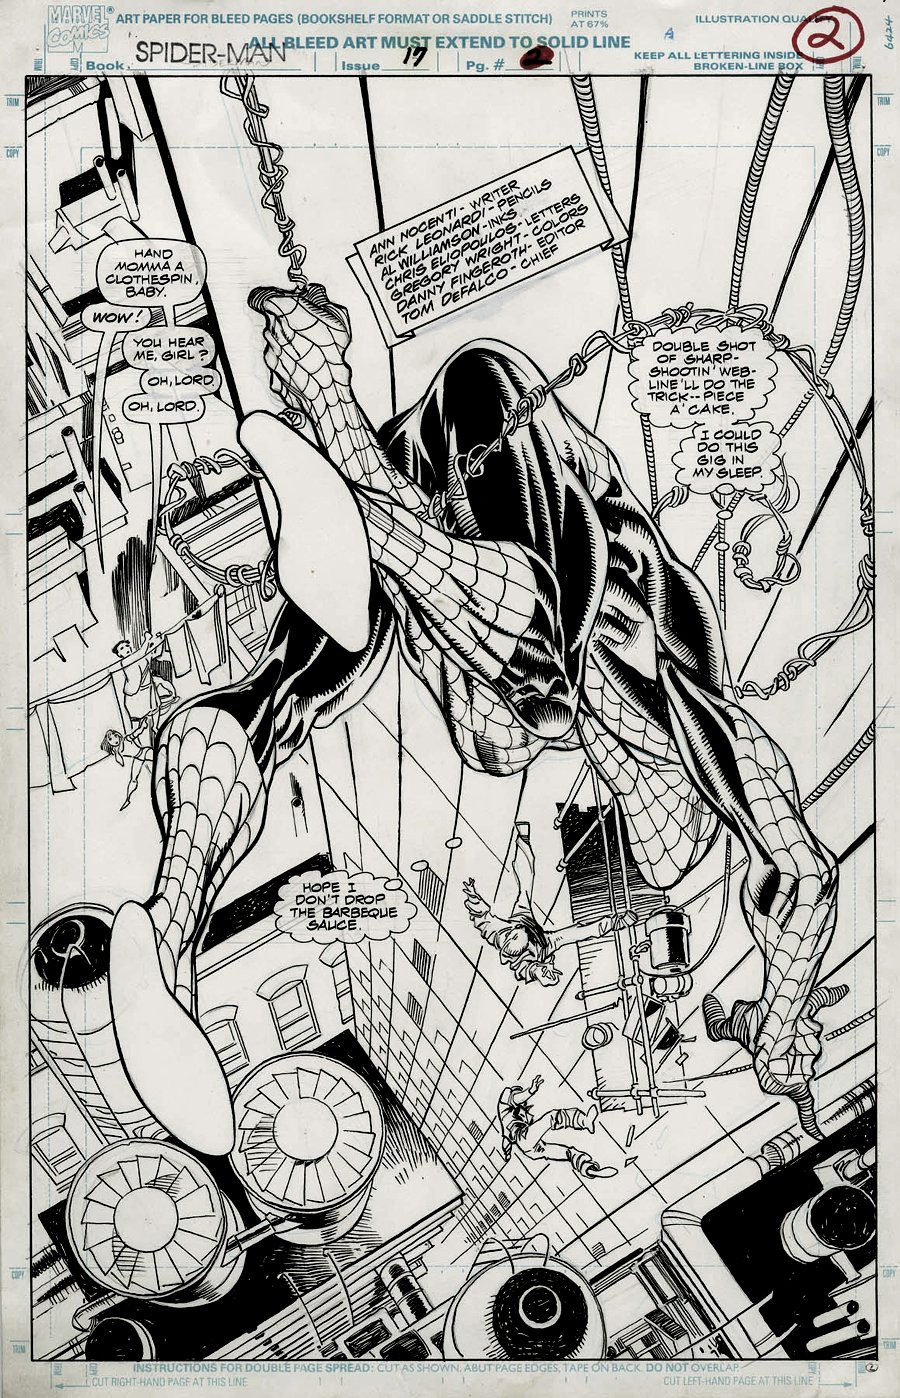 Spider Man on loan from Doug Horner